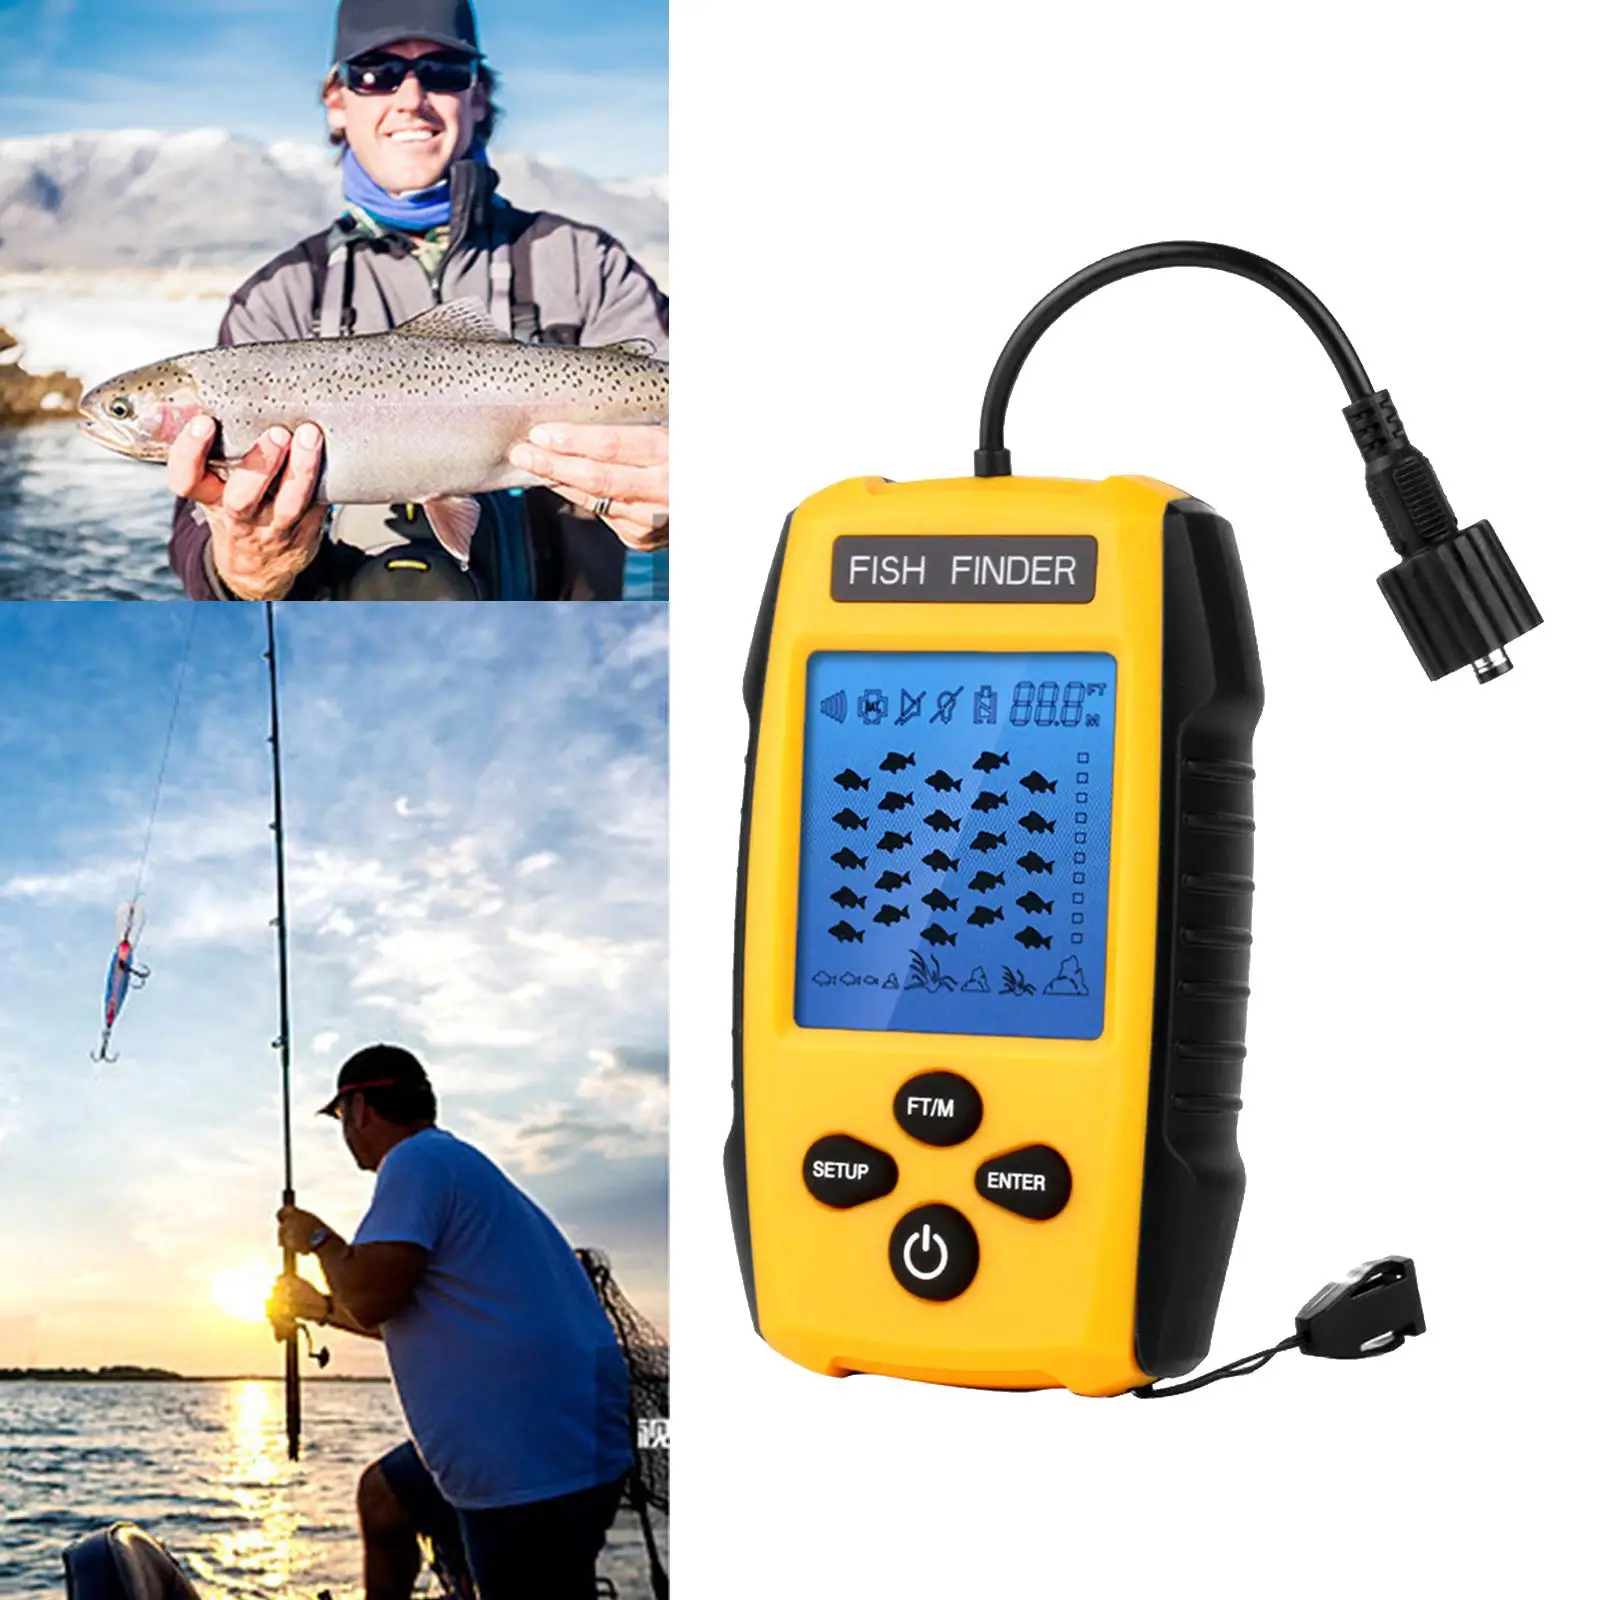 Portable Fish Finder Travel, Handheld Fishfinder Depth with Sonar Sensor Transducer and LCD Display Fish Depth Finder 